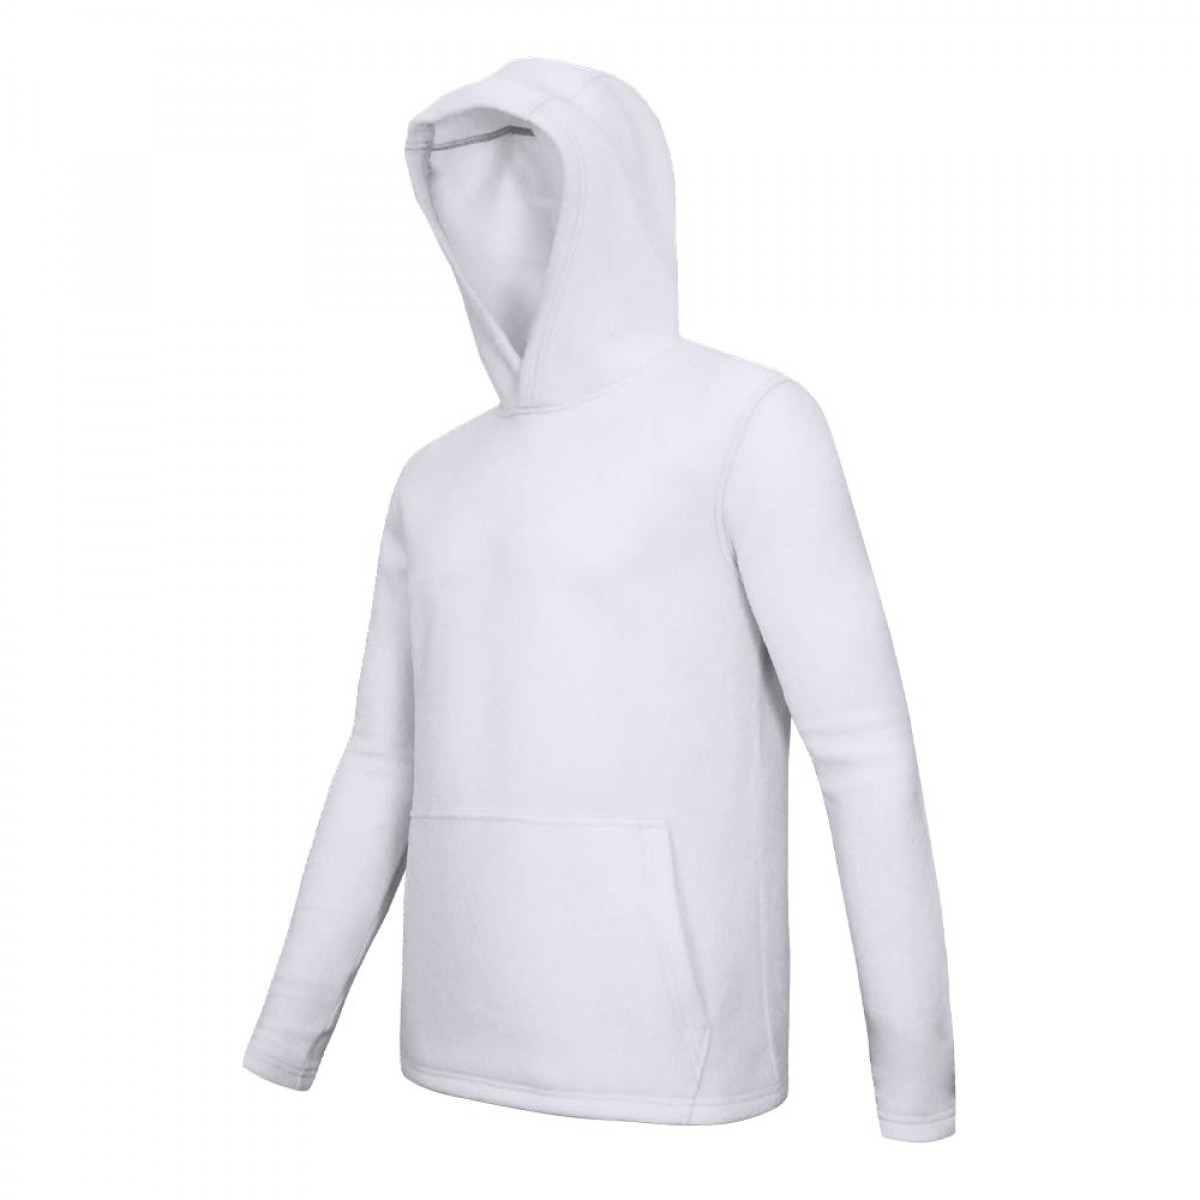 mens-fleece-hoodie-jacket-kfhj15104-7a